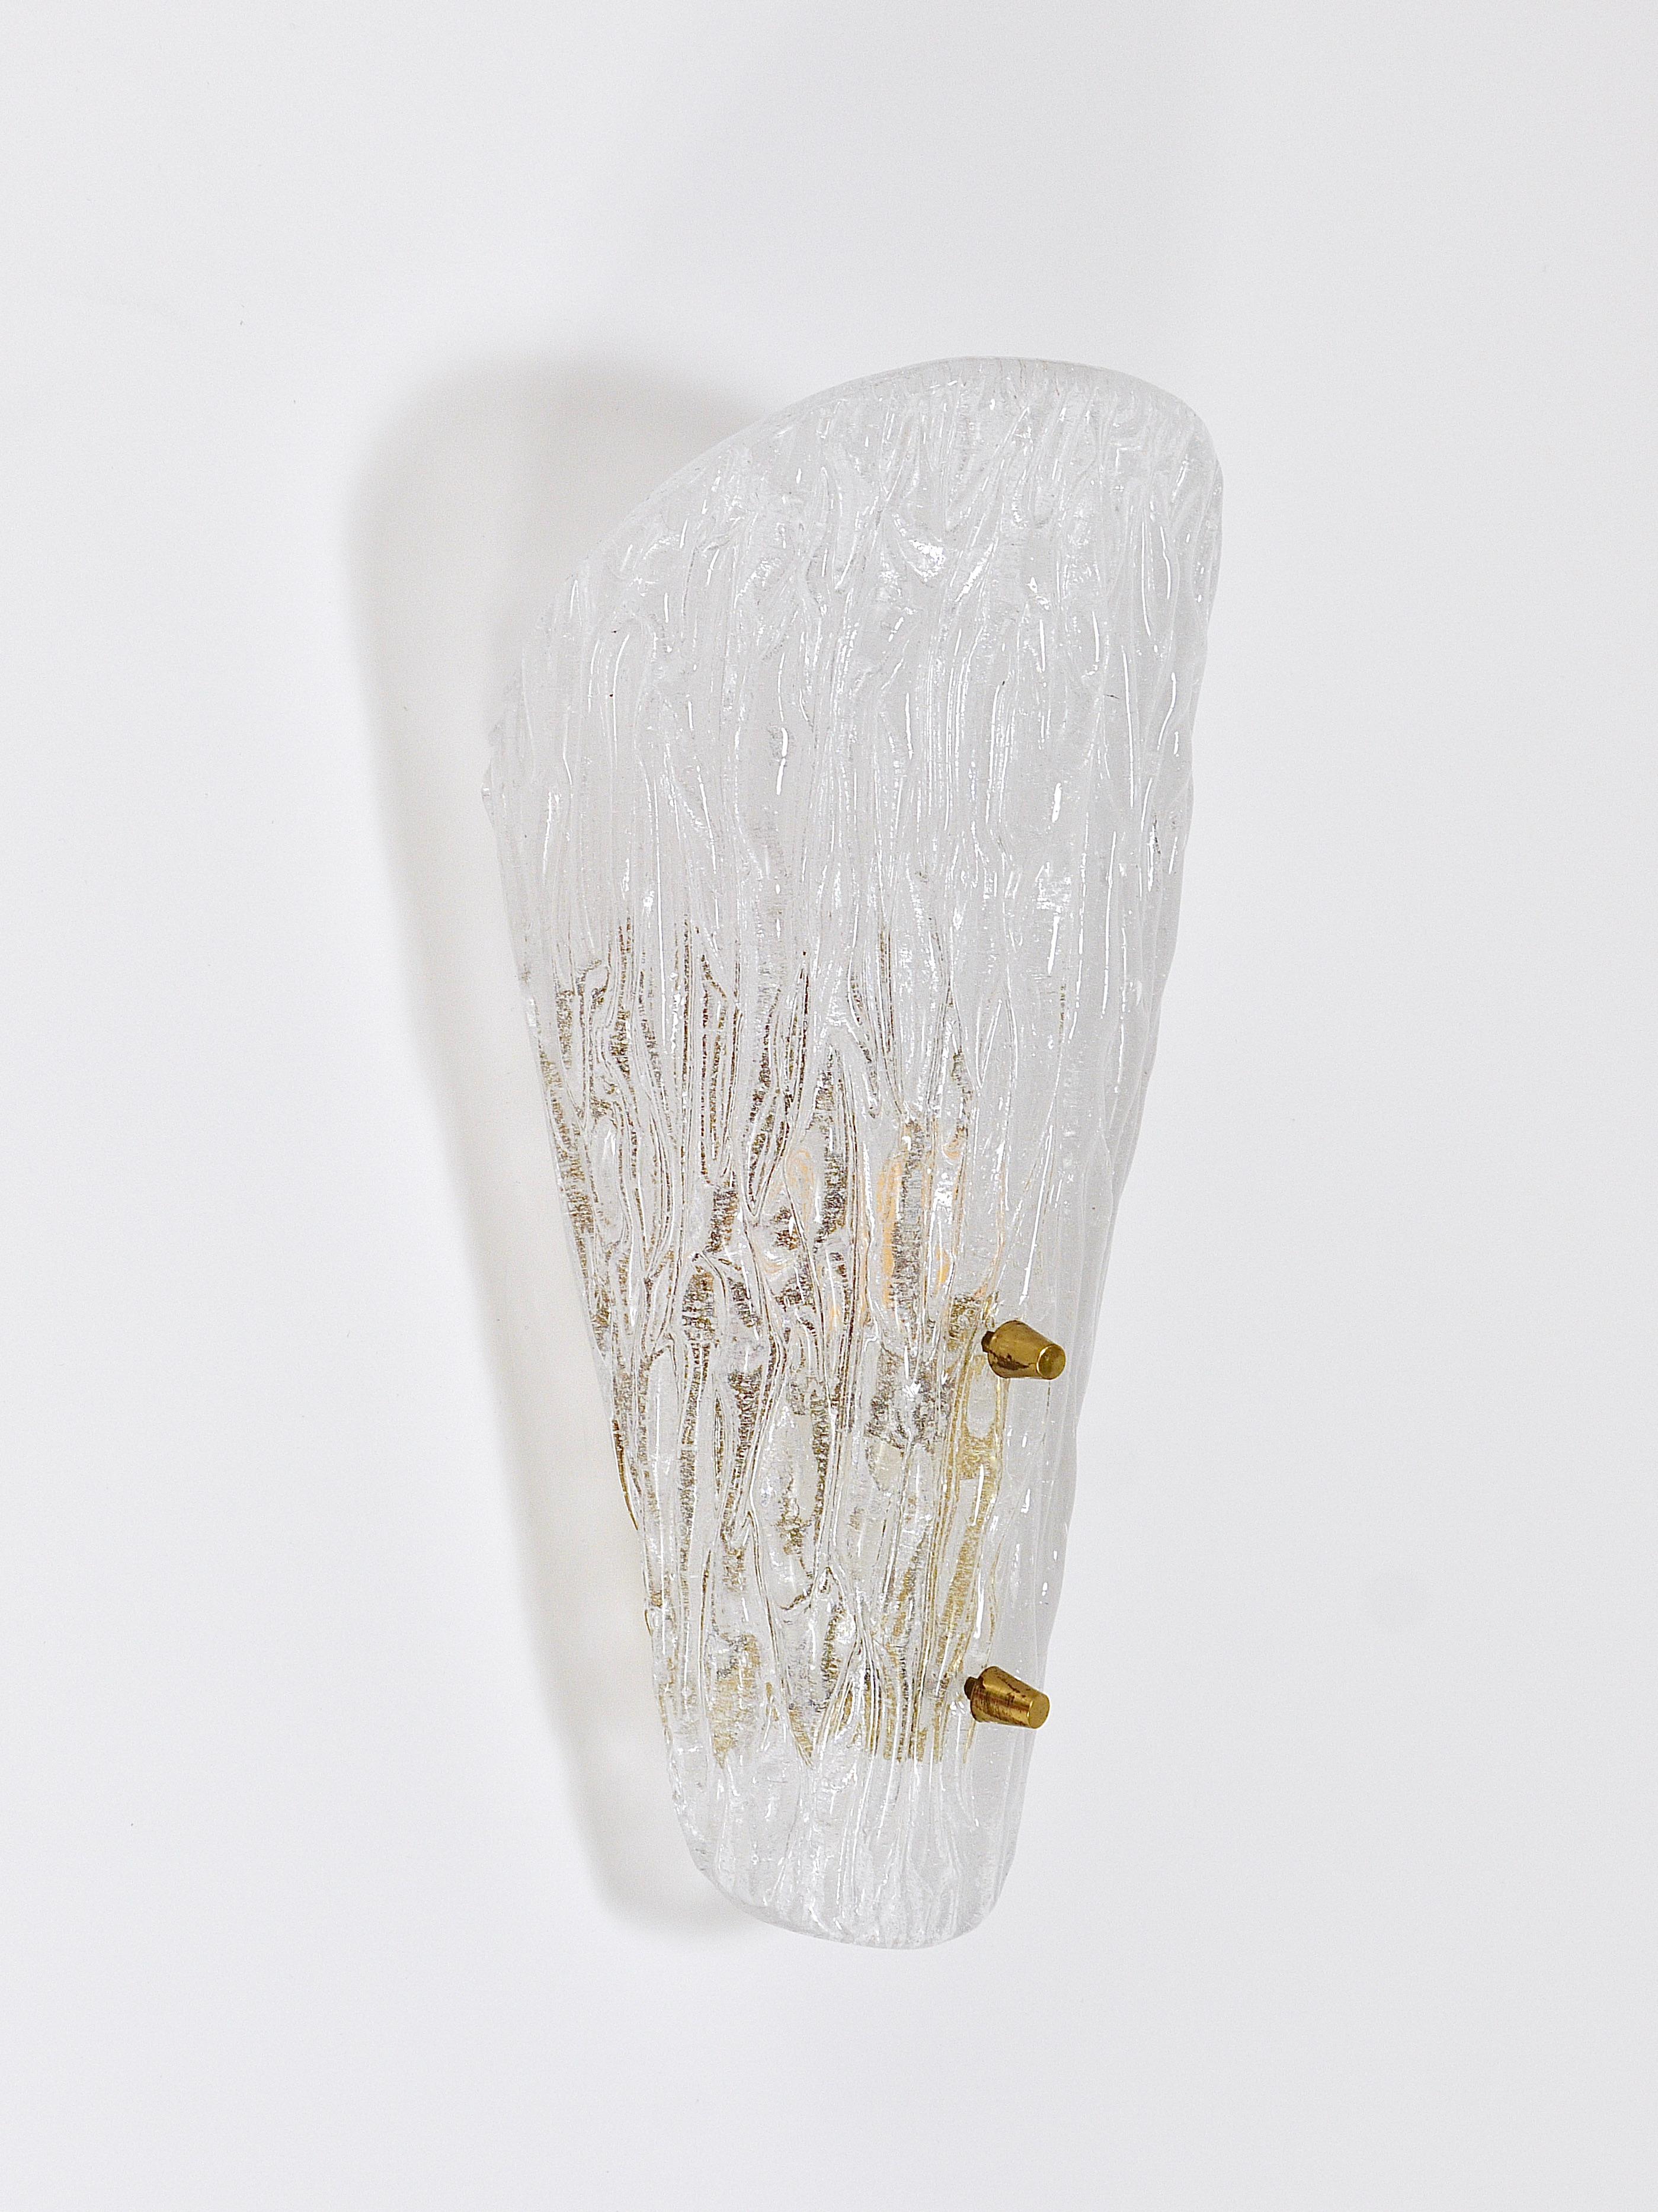 One Kalmar Midcentury Brass & Textured Glass Scone Wall Light, Austria, 1950s For Sale 2